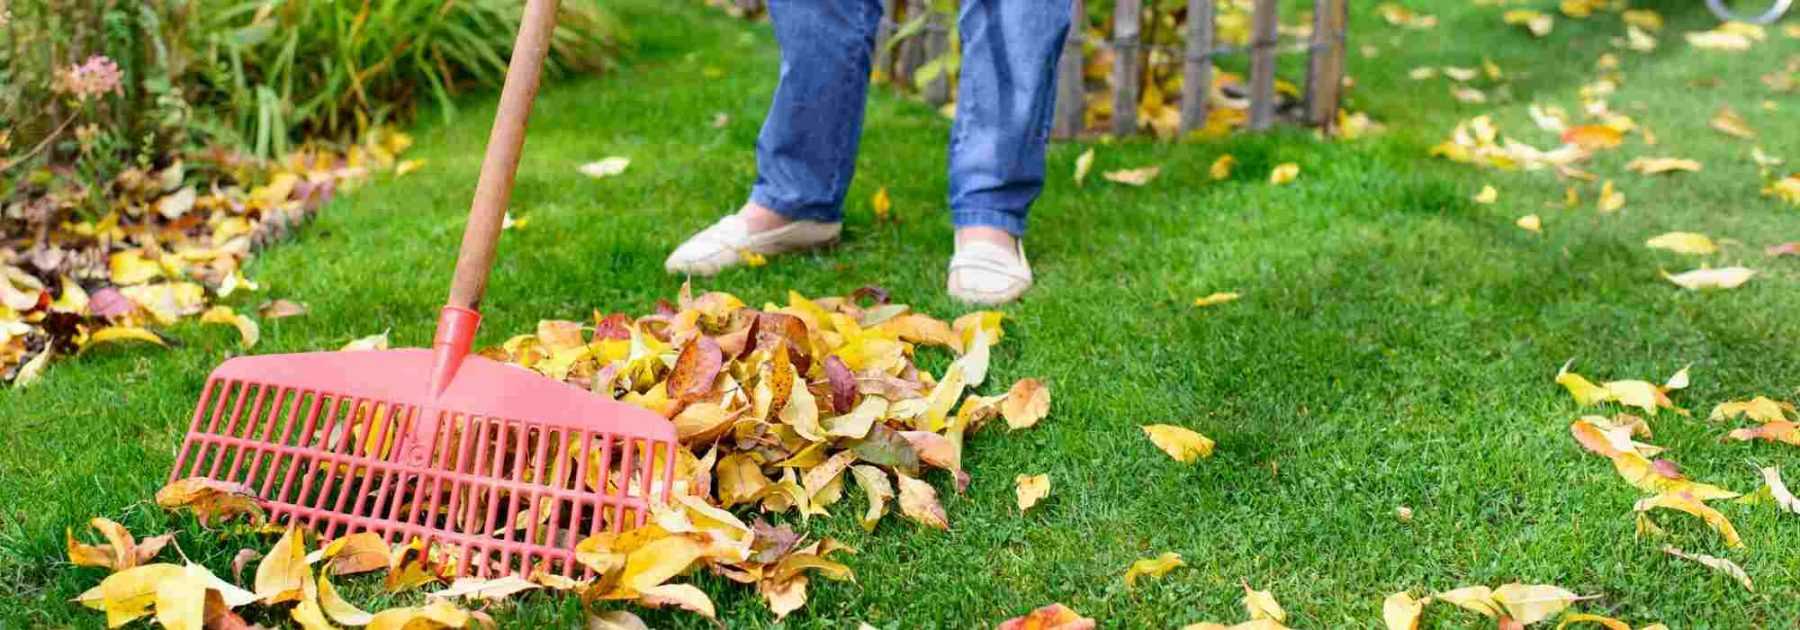 Comment utiliser les feuilles mortes au jardin ? - Blog jardin